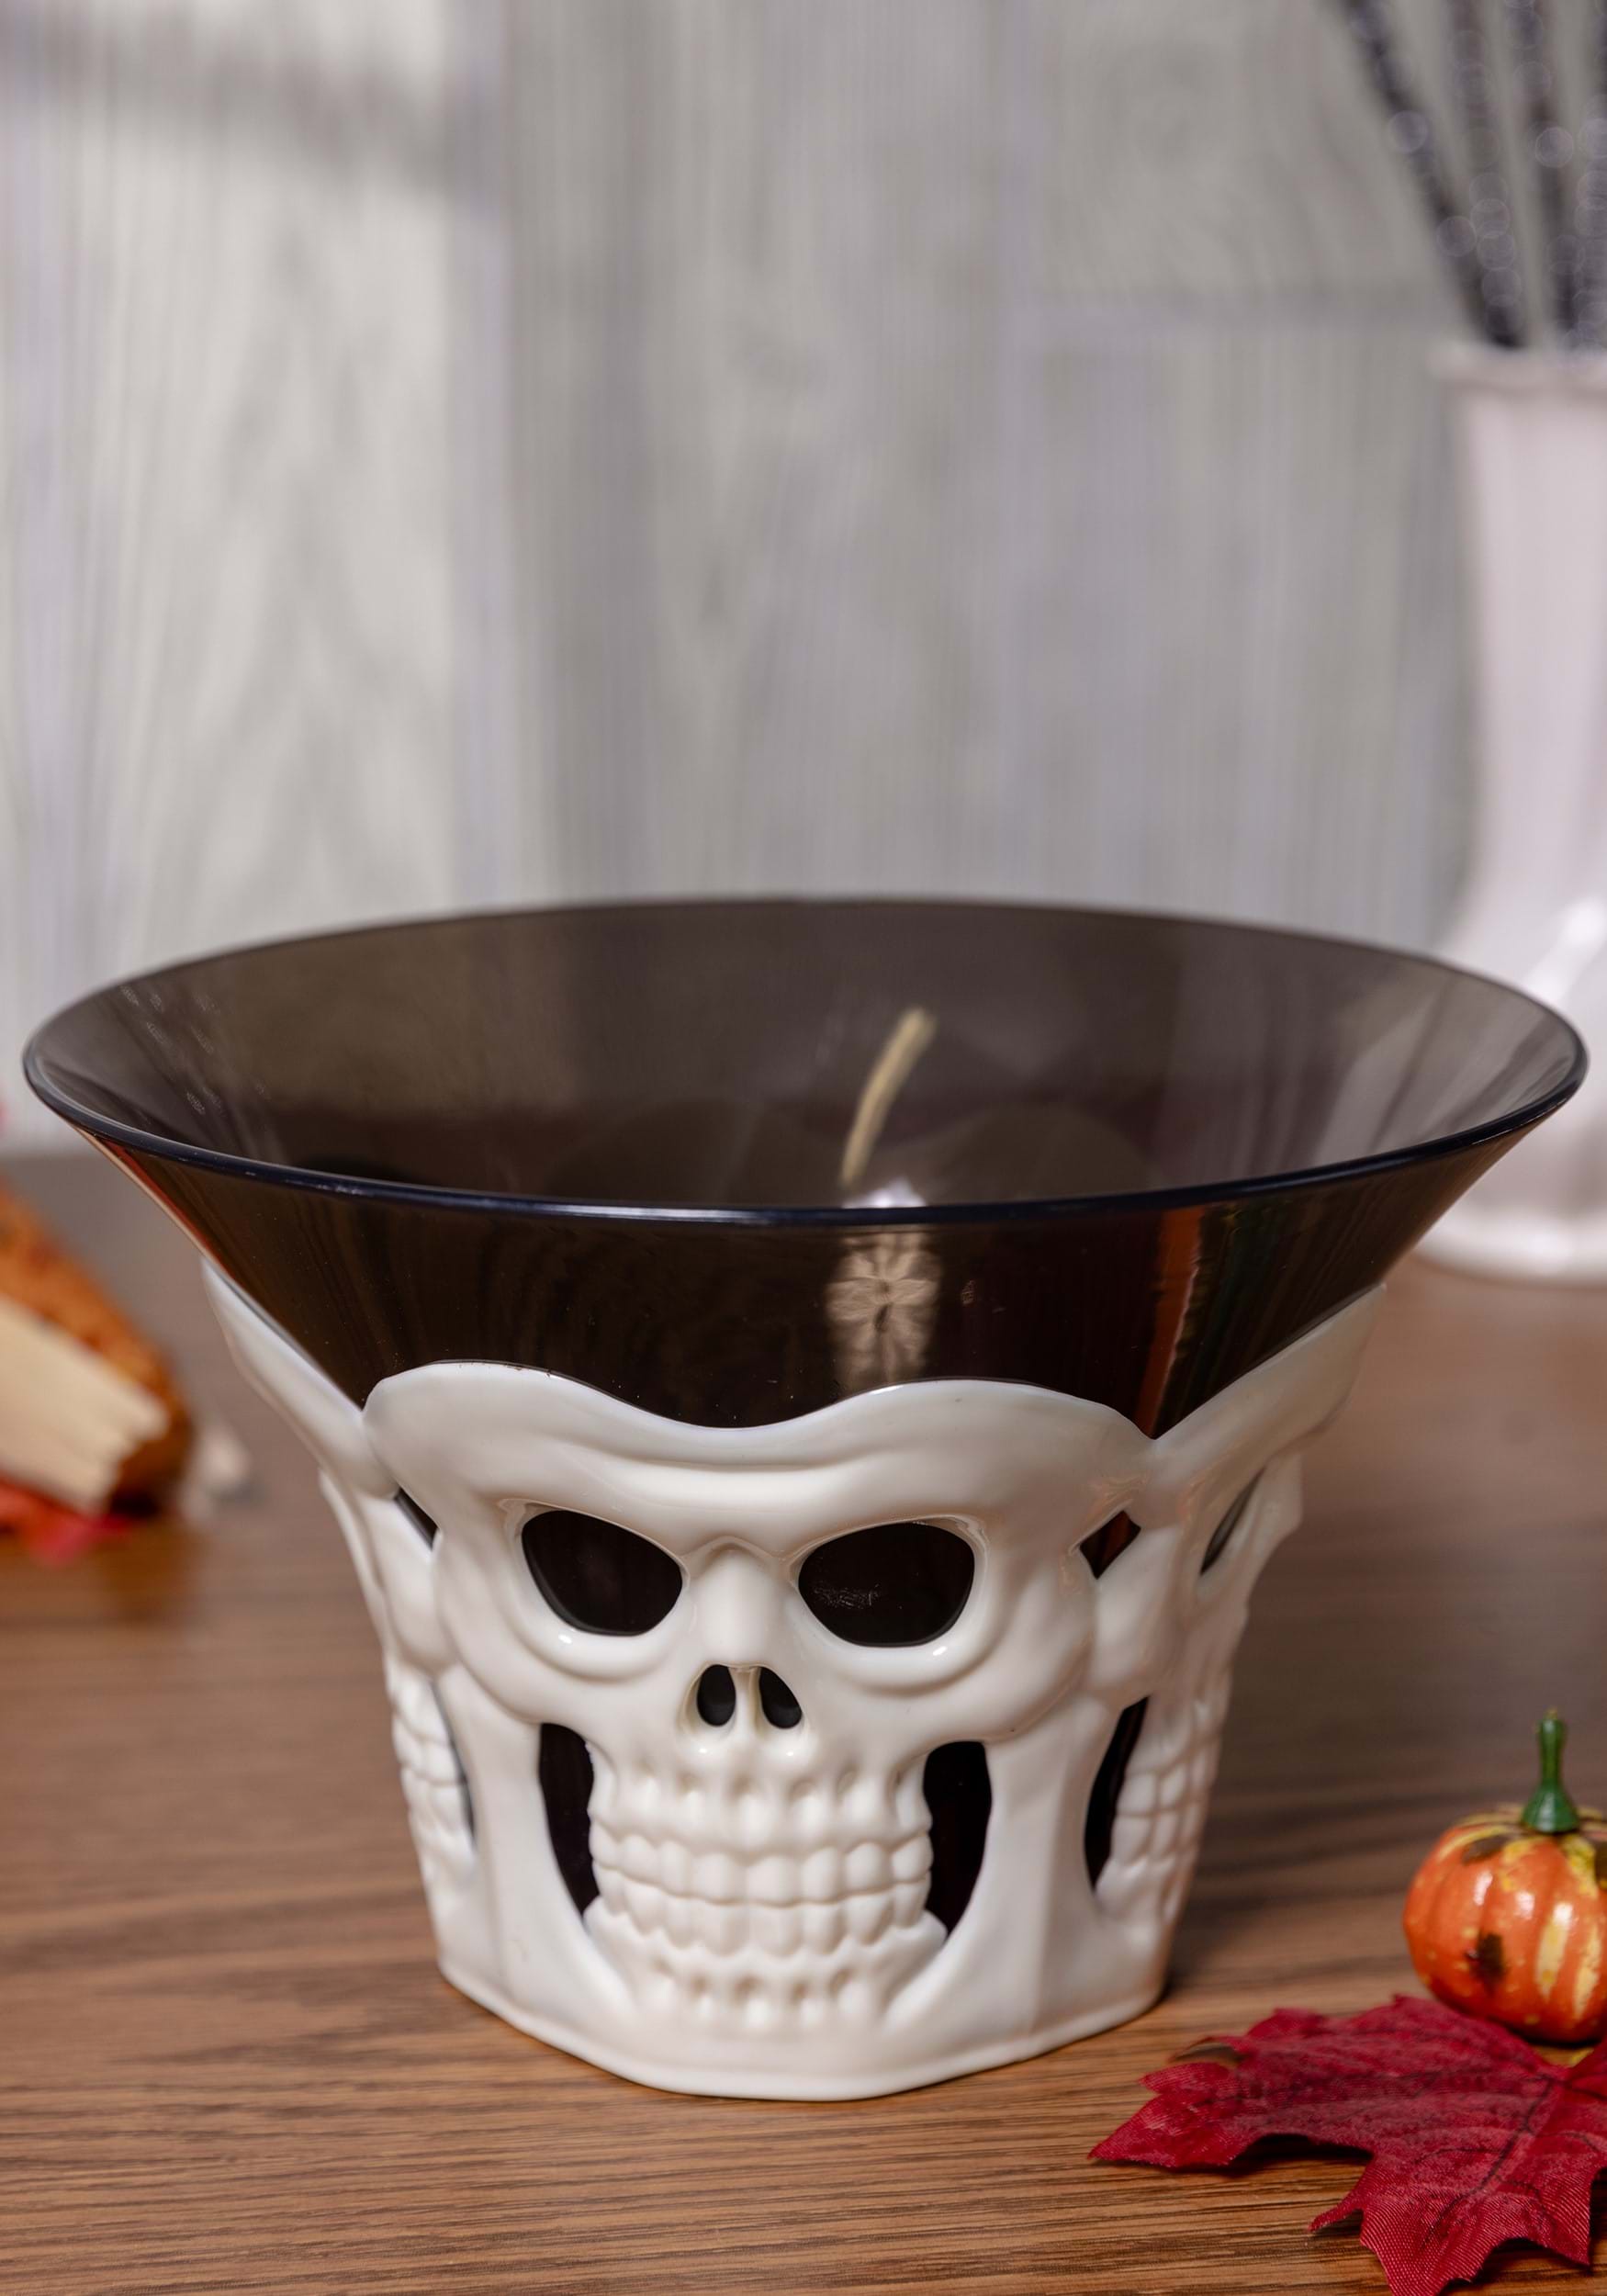 4.5 Inch Skull Treat Bowl Decoration , Halloween Candy Bowls